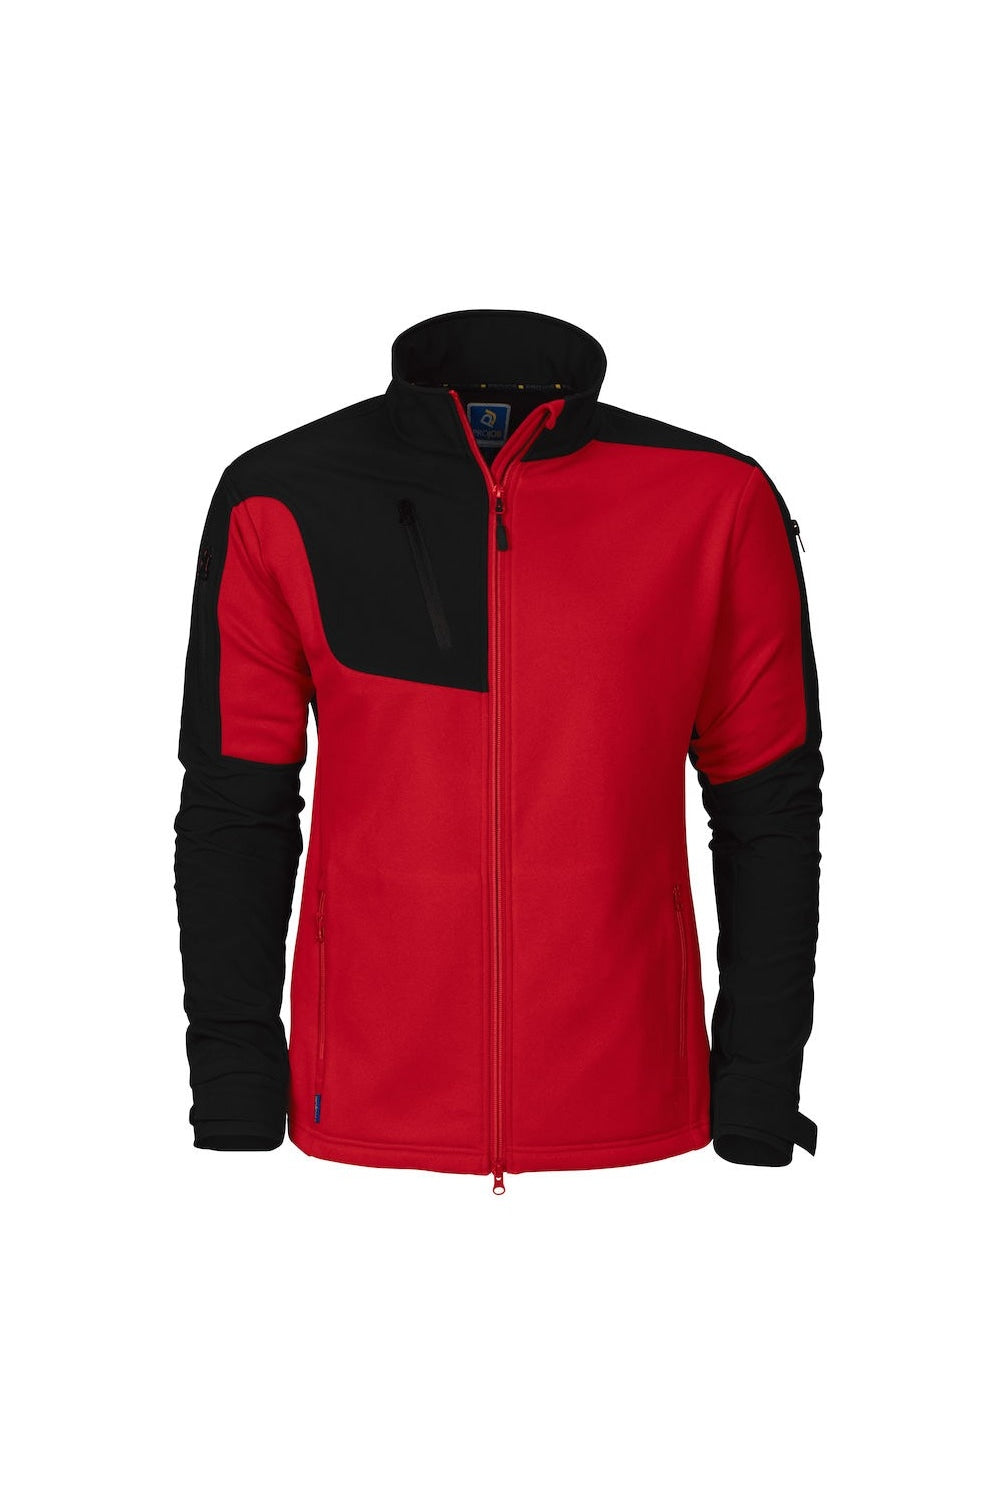 Projob Mens Functional Jacket (Red/Black)